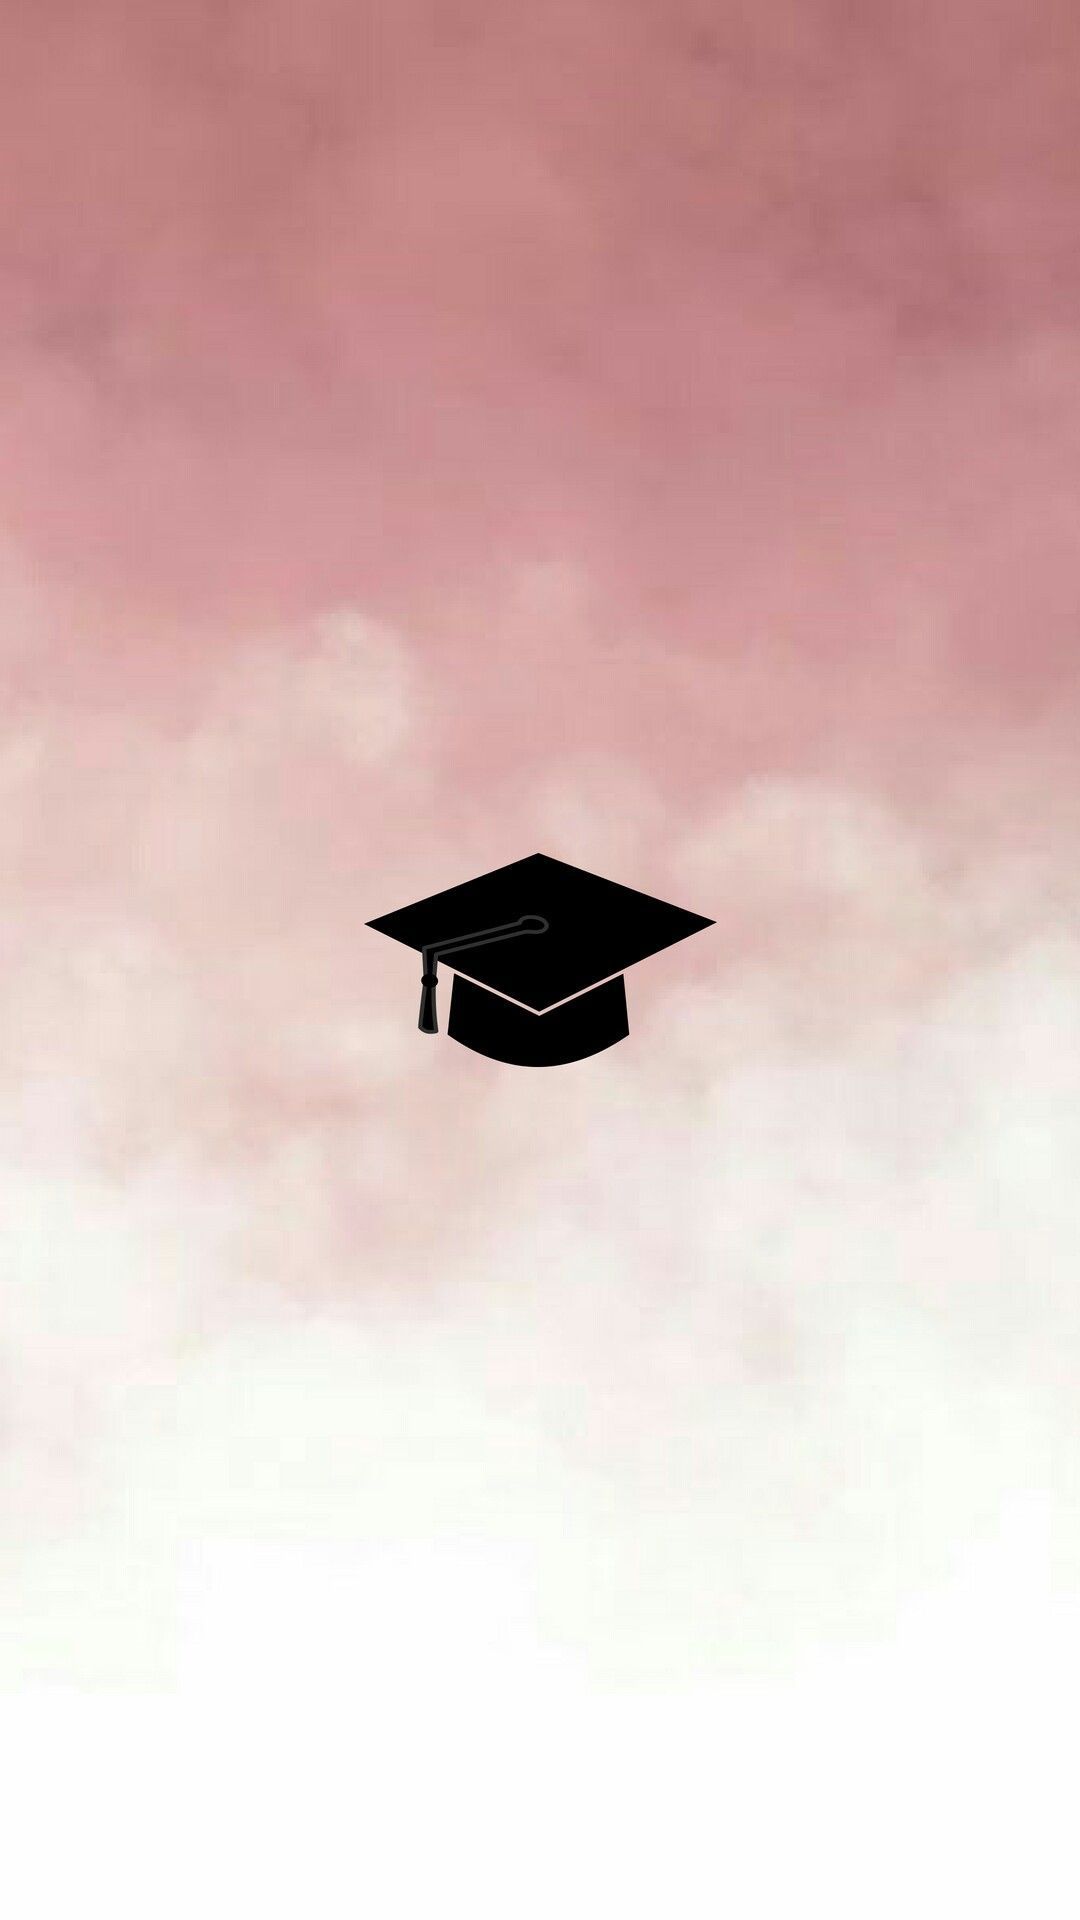 School / College College Stories, Logo Background, Girl Wallpaper, iPhone Wallpa. Instagram background, Instagram logo, Instagram icons